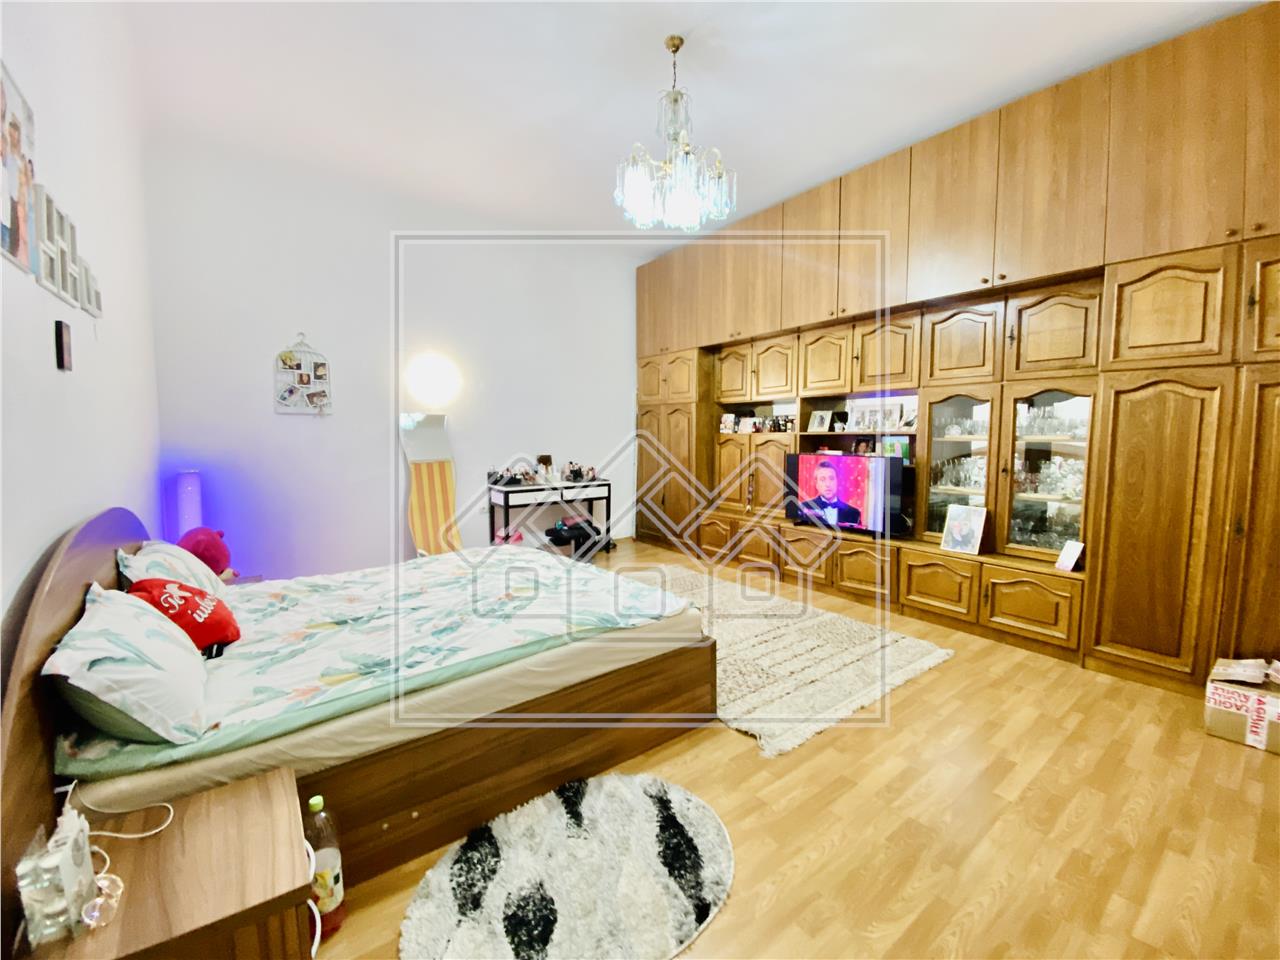 Apartament 2 rooms for sale in Sibiu - Central Area